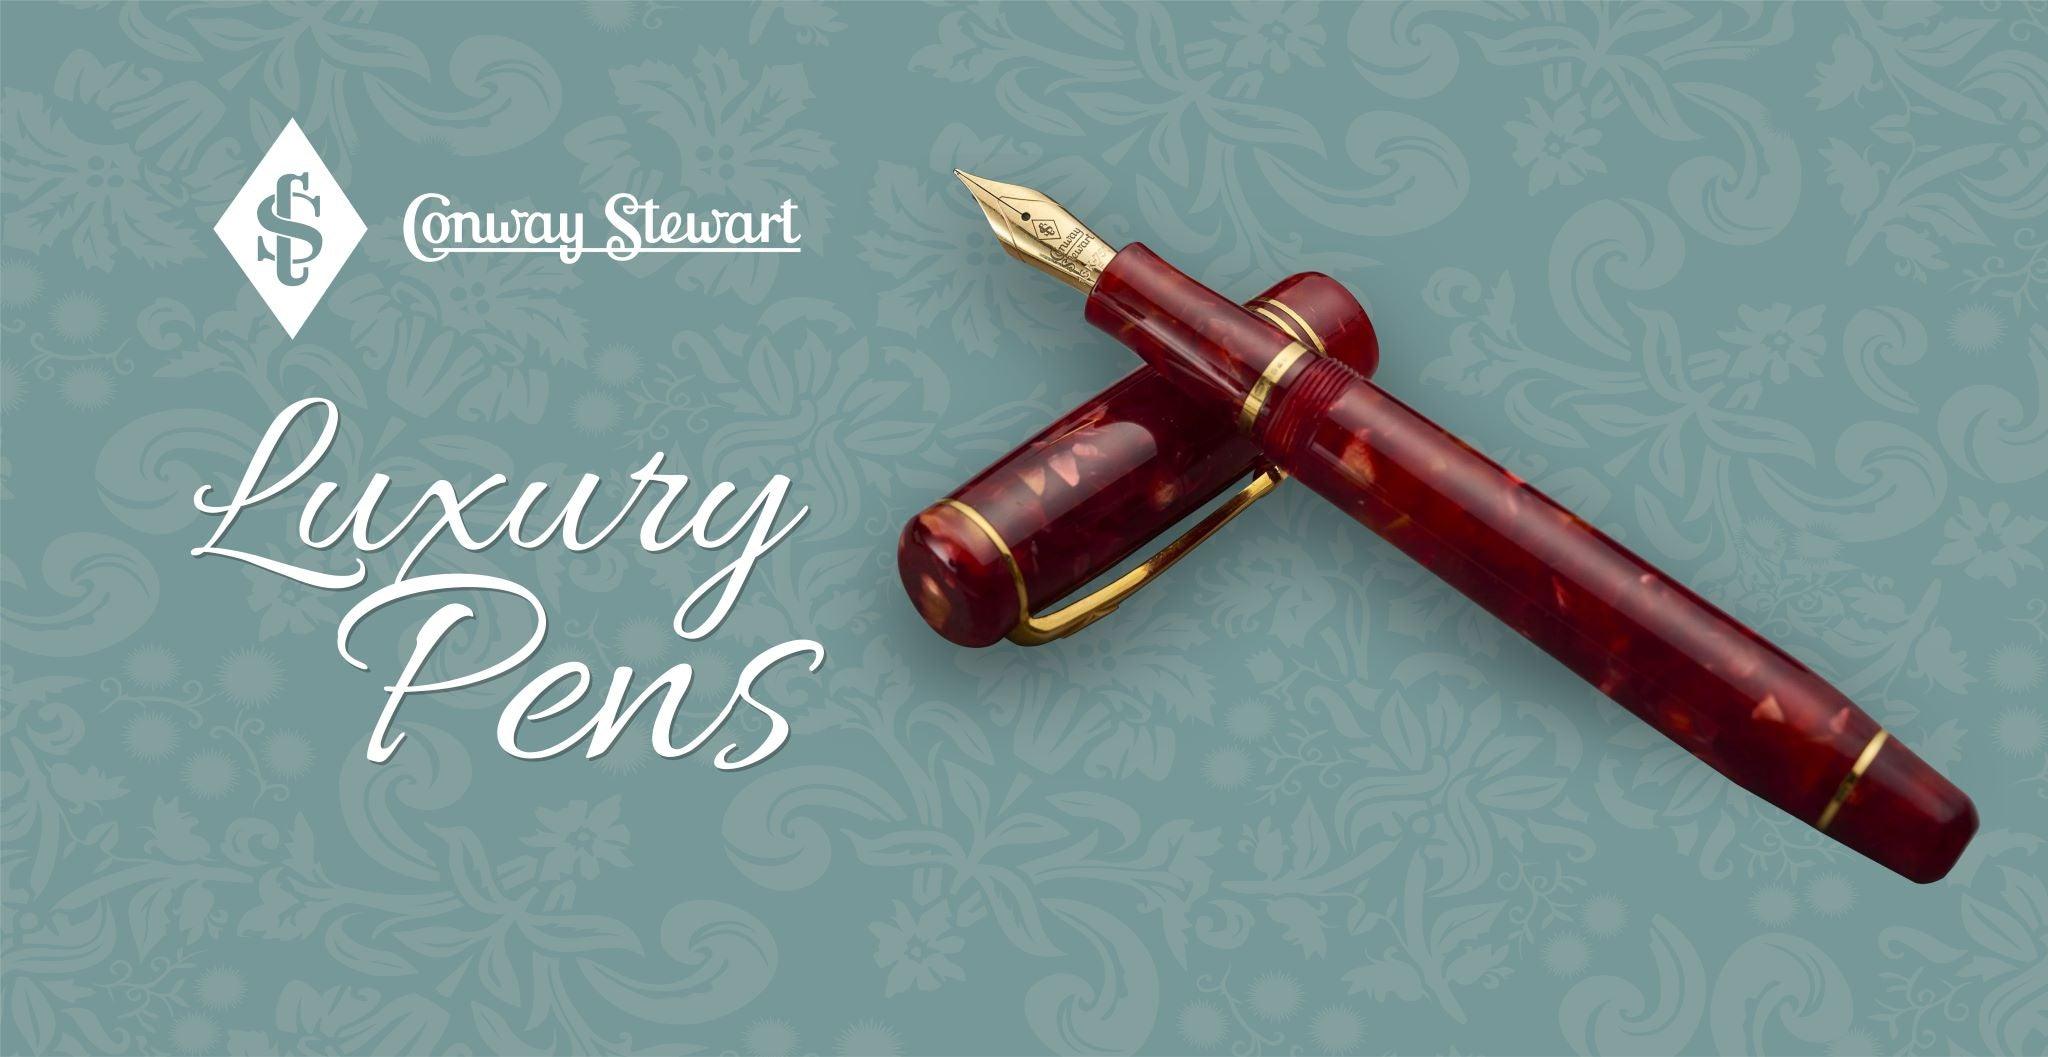 Luxury Pens, 2007 - Conway Stewart